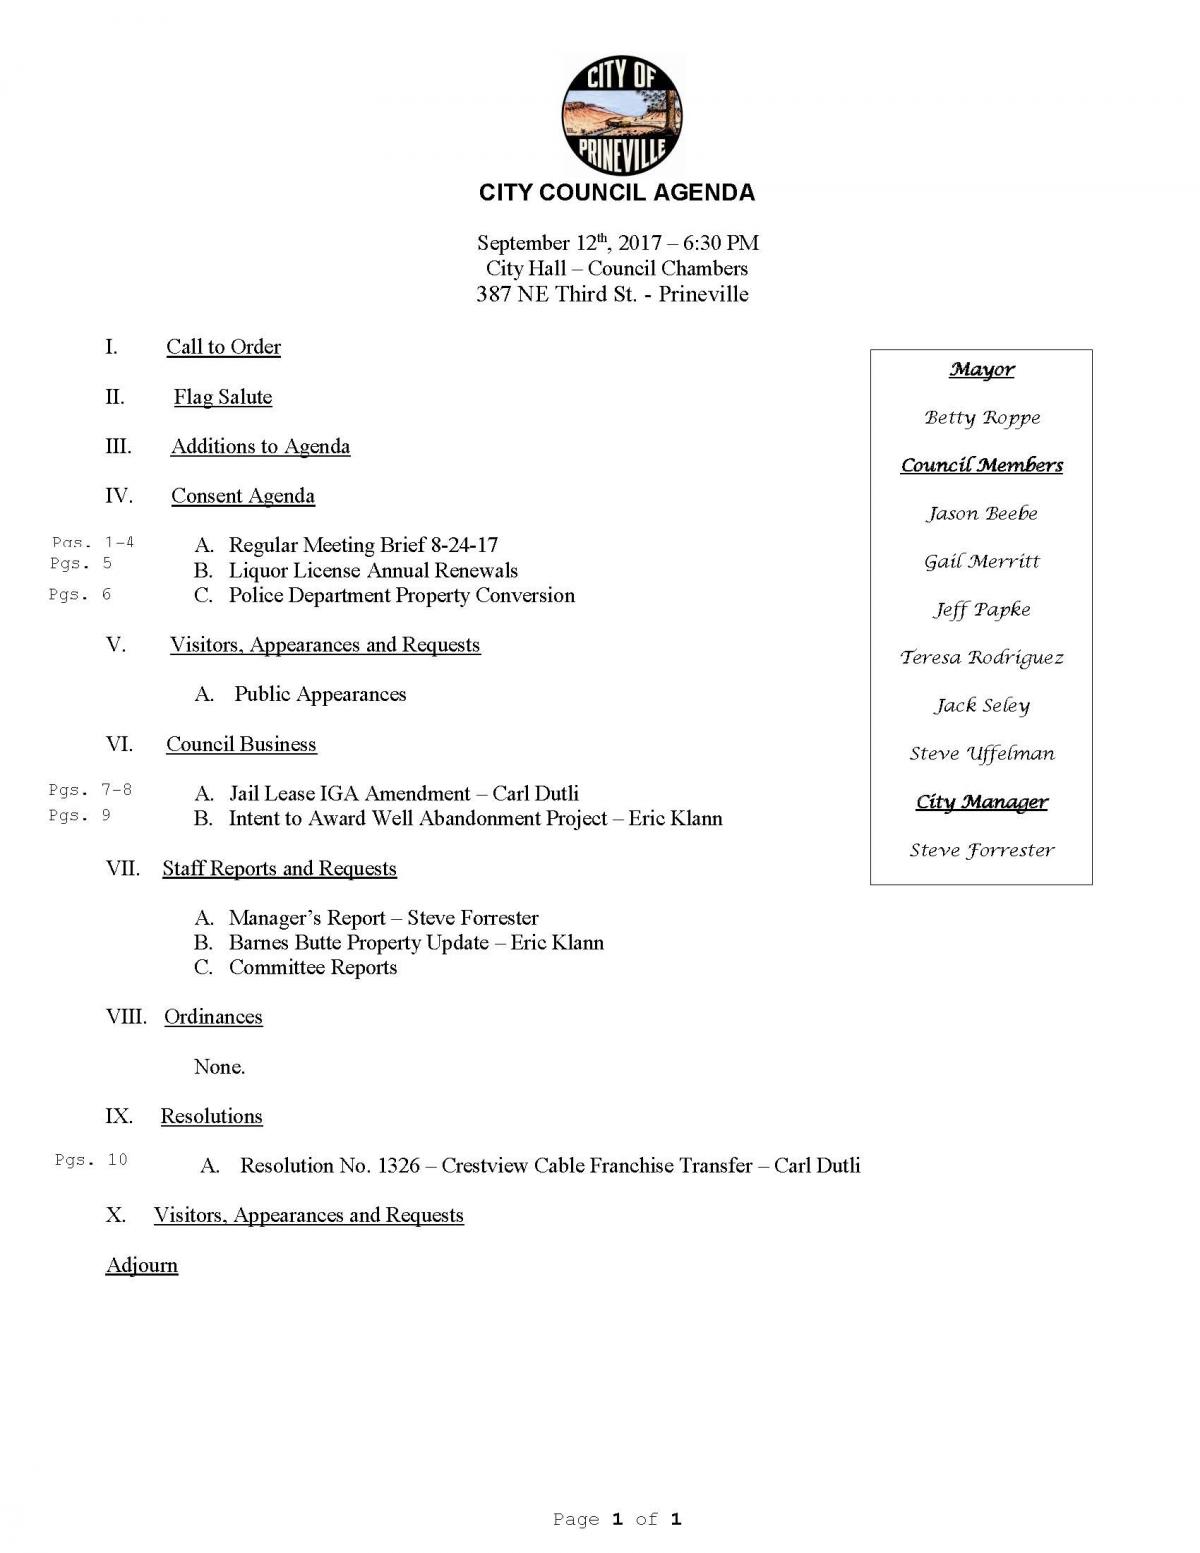 Council Agenda 9-12-17